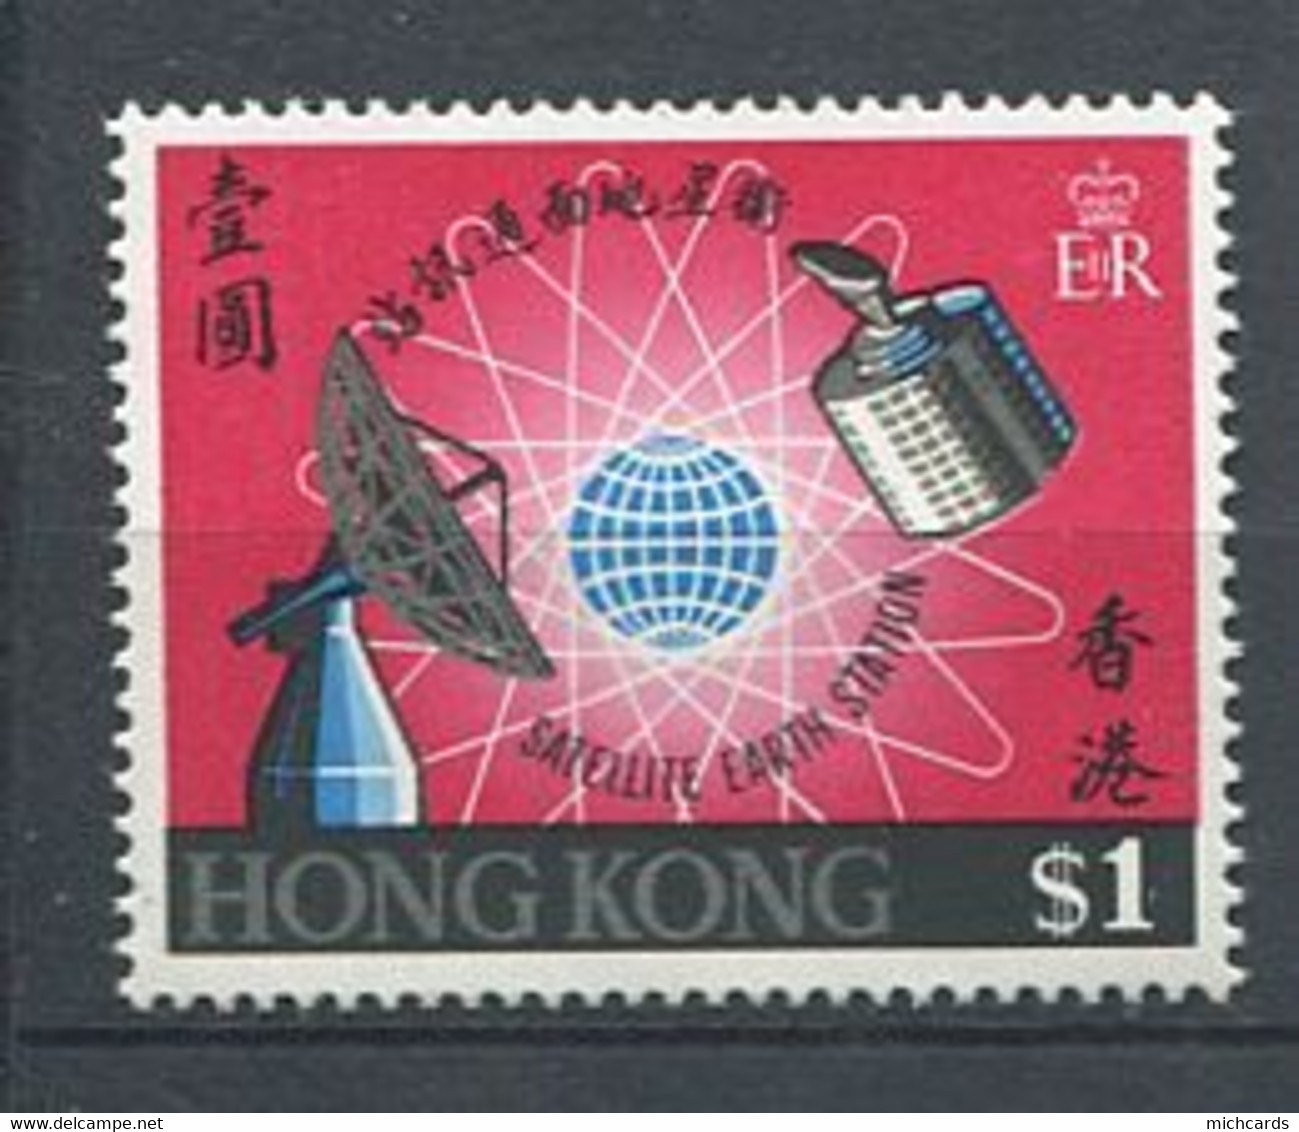 232 HONG KONG 1969 - Yvert 243 - Station Satellite Communication - Neuf ** (MNH) Sans Trace De Charniere - Neufs